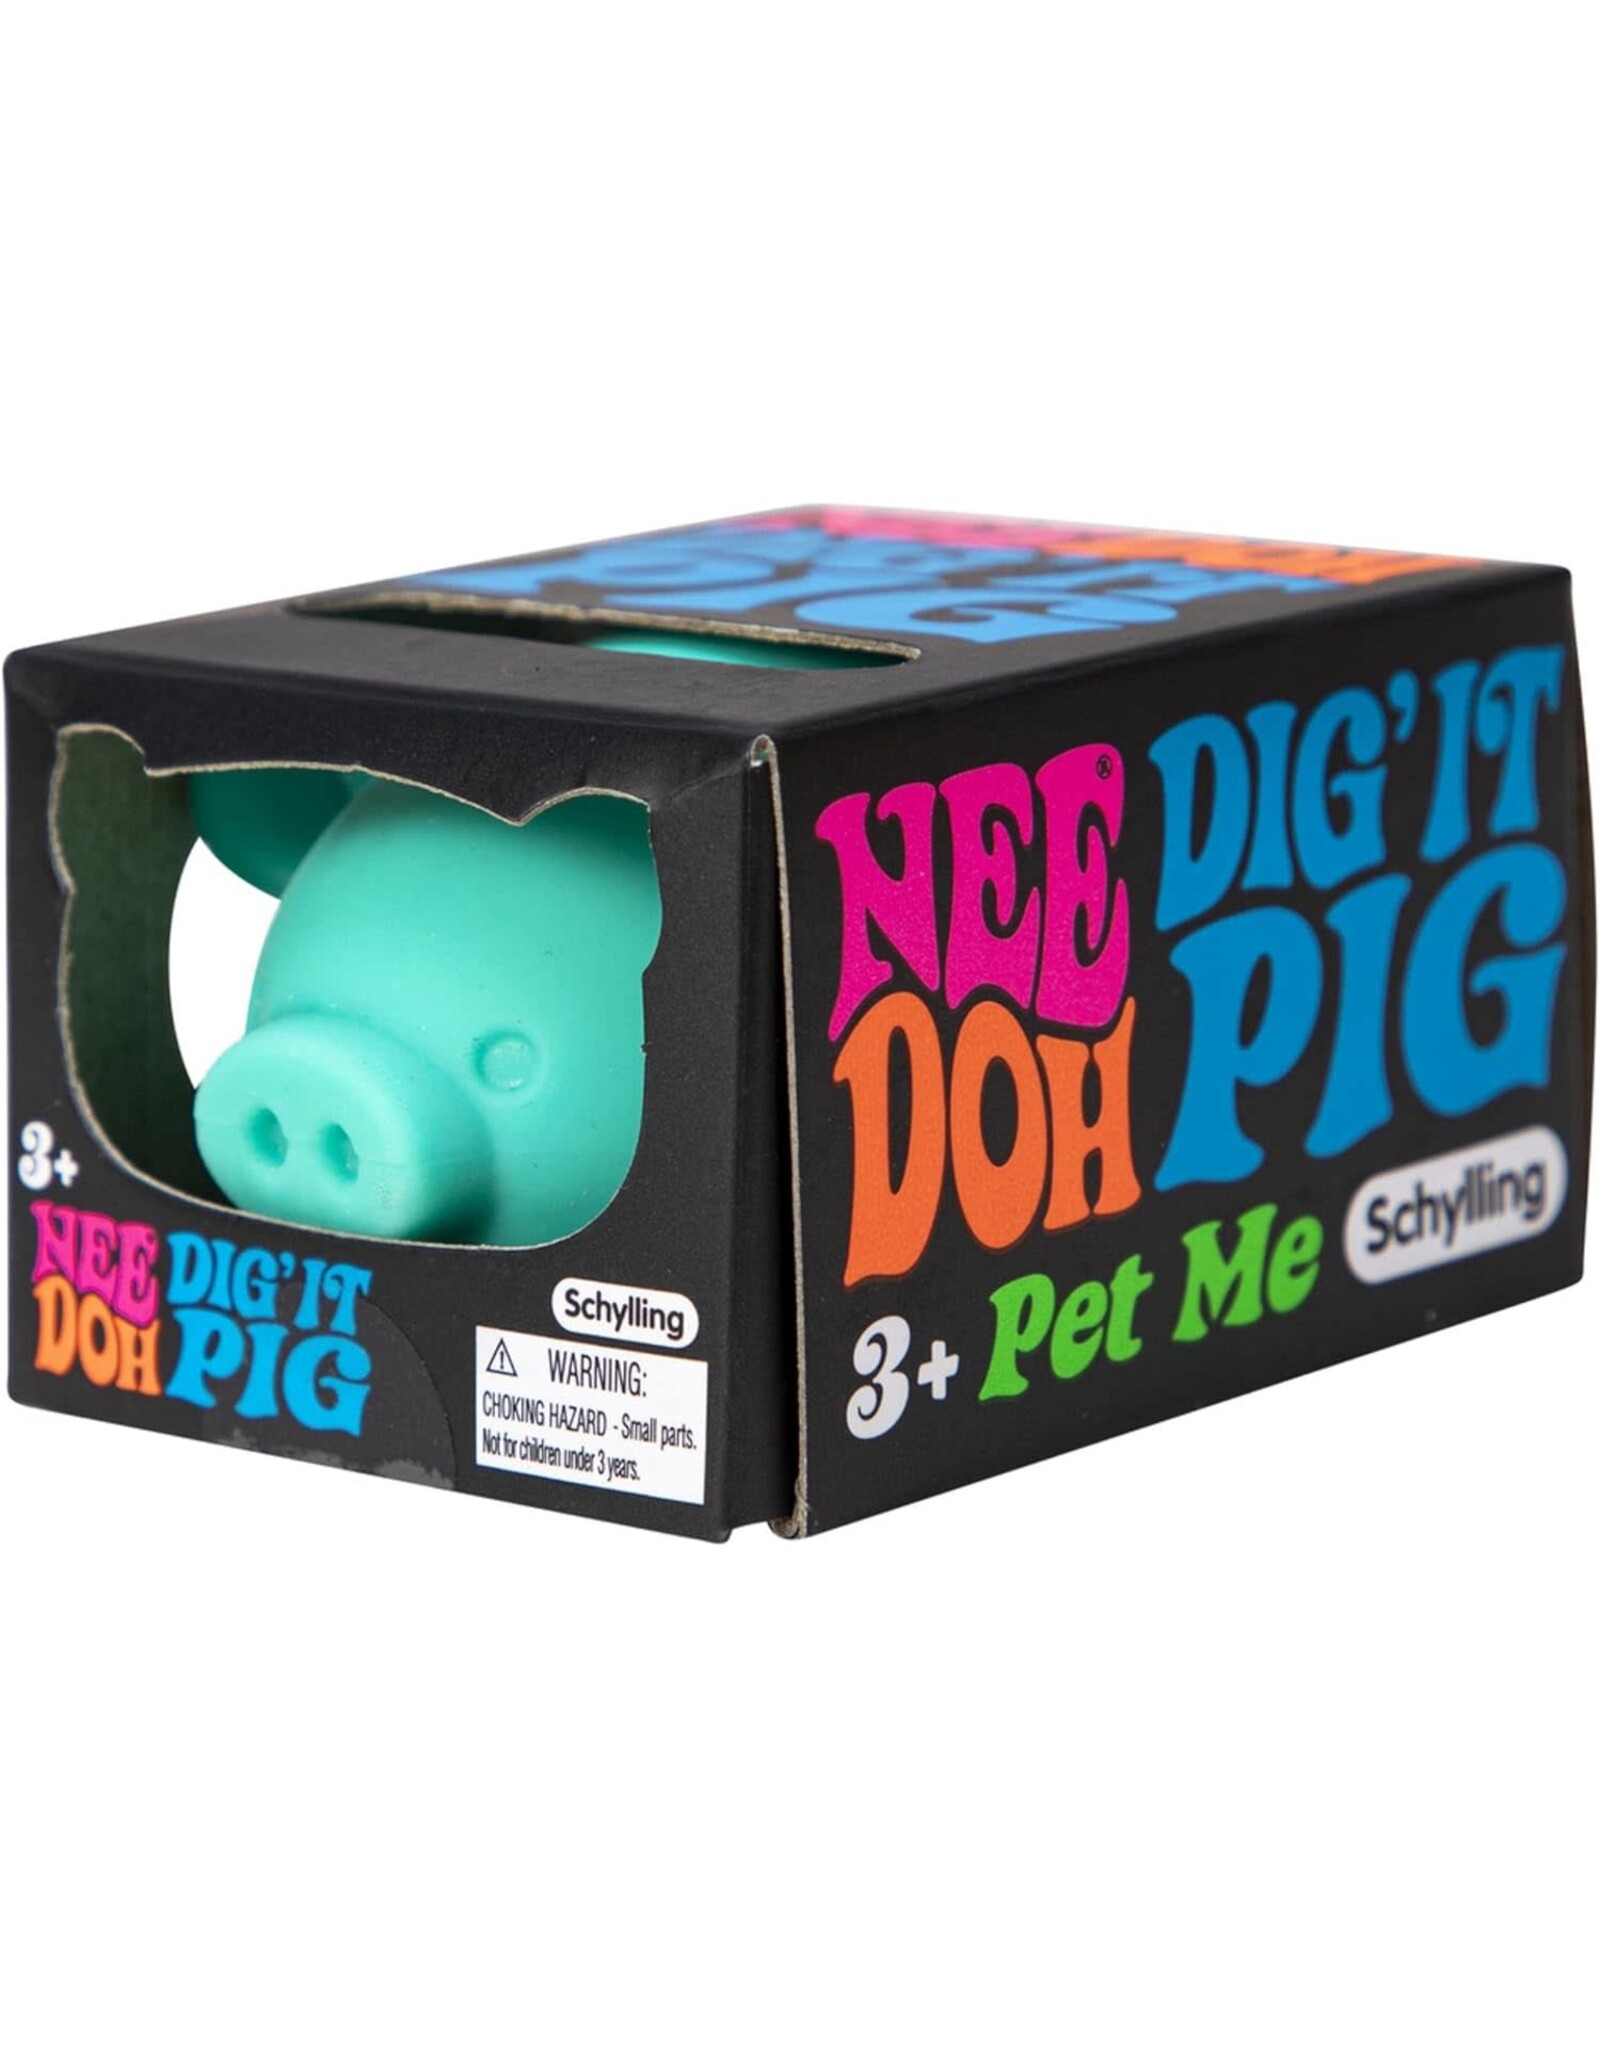 NeeDoh Dig It Pig